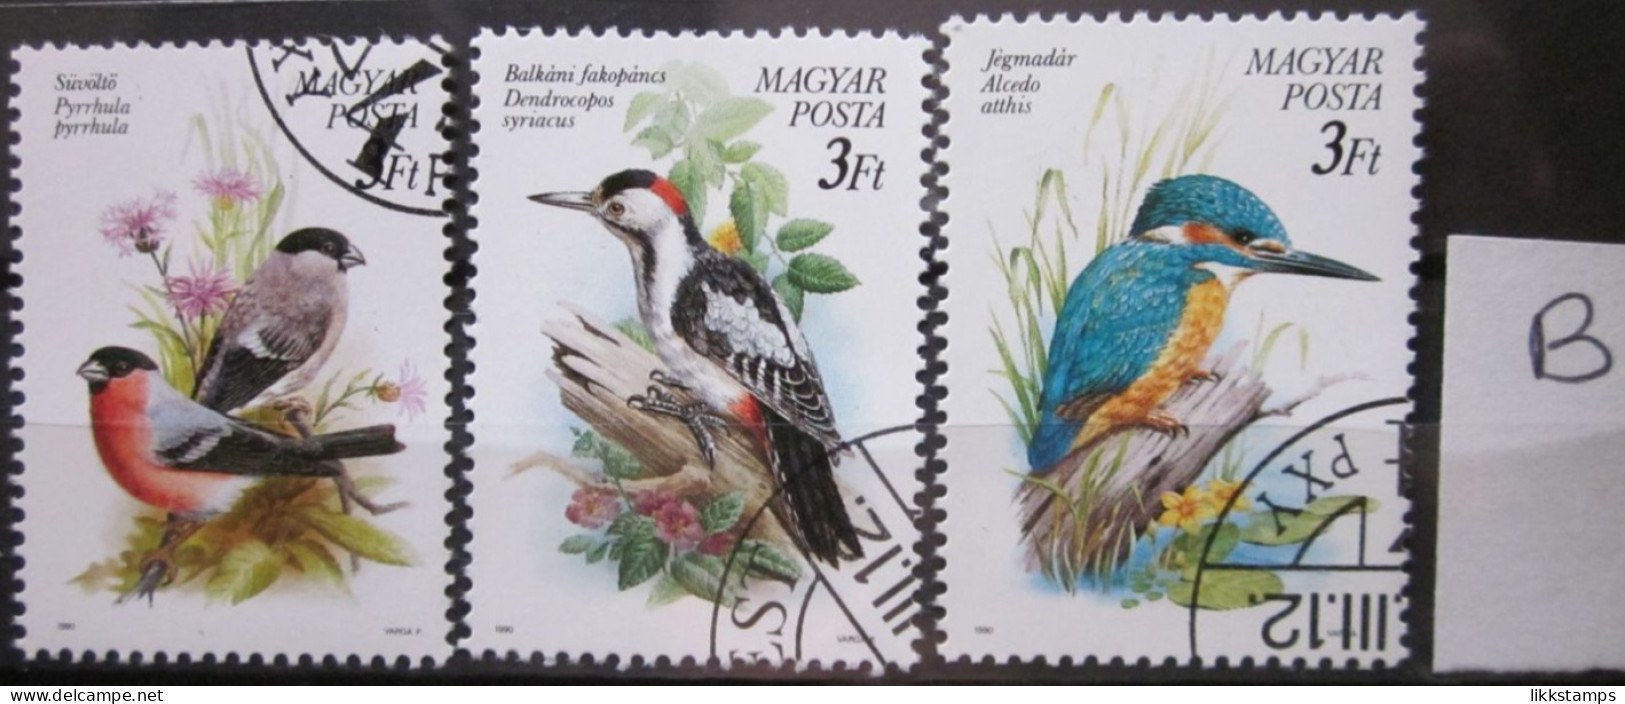 HUNGARY ~ 1990 ~ S.G. NUMBERS 3960 - 3962, ~ 'LOT B' ~ BIRDS. ~ VFU #02795 - Usati